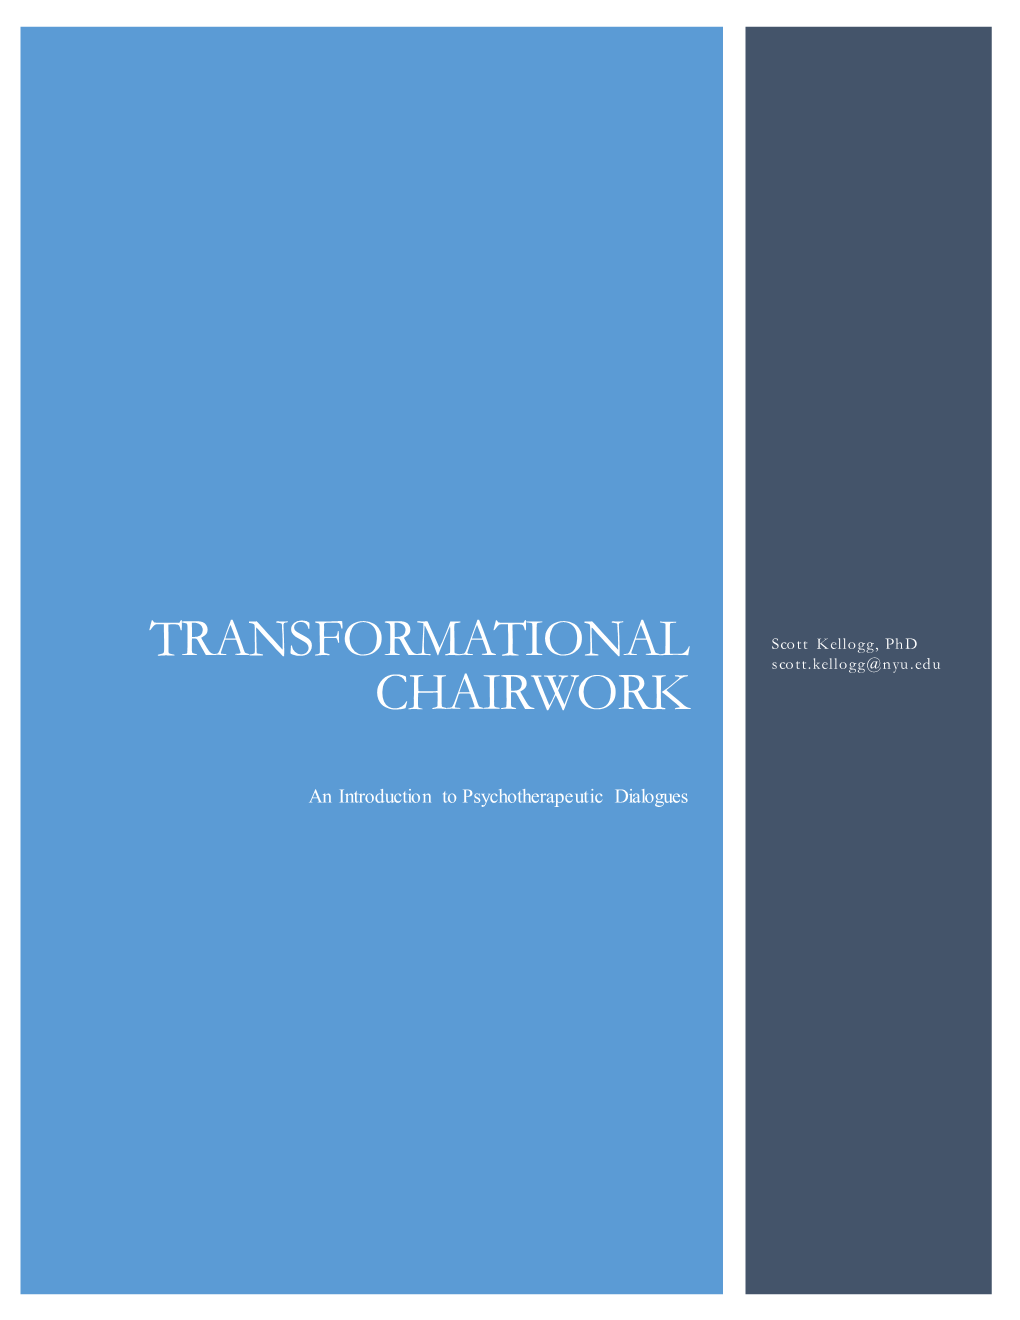 Transformational Chairwork Training Program (